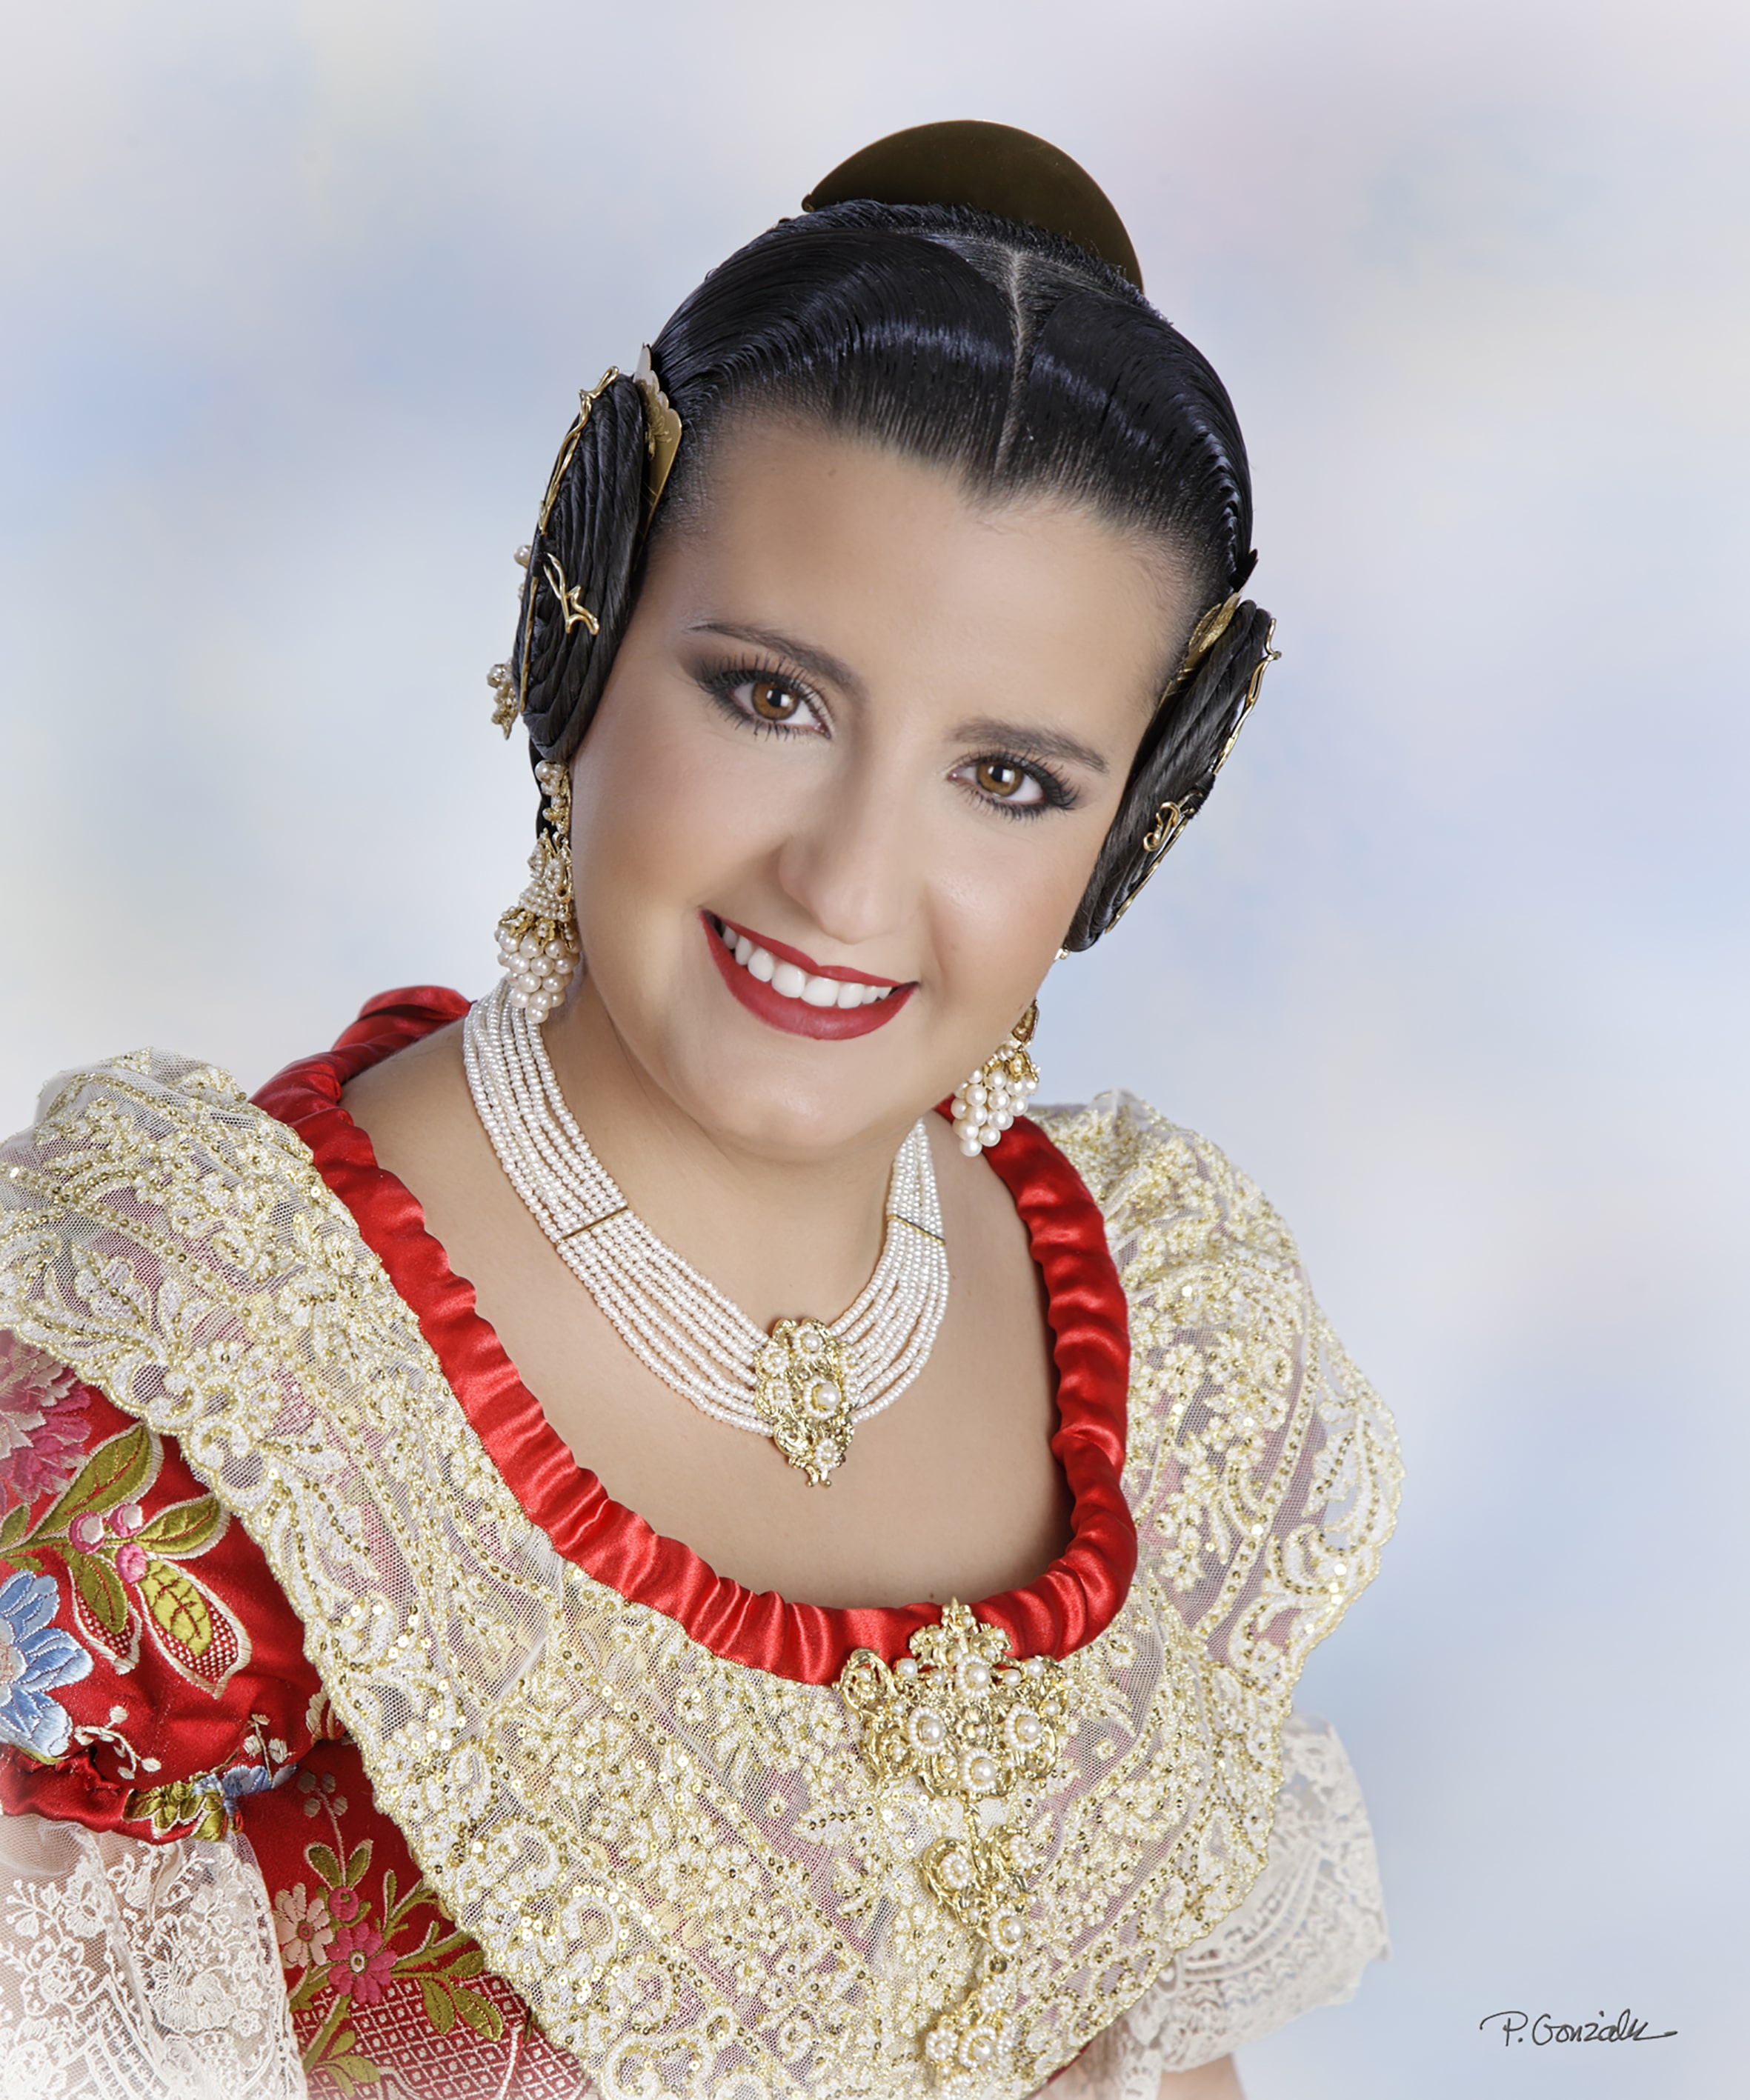 Carolina Soriano Alabau